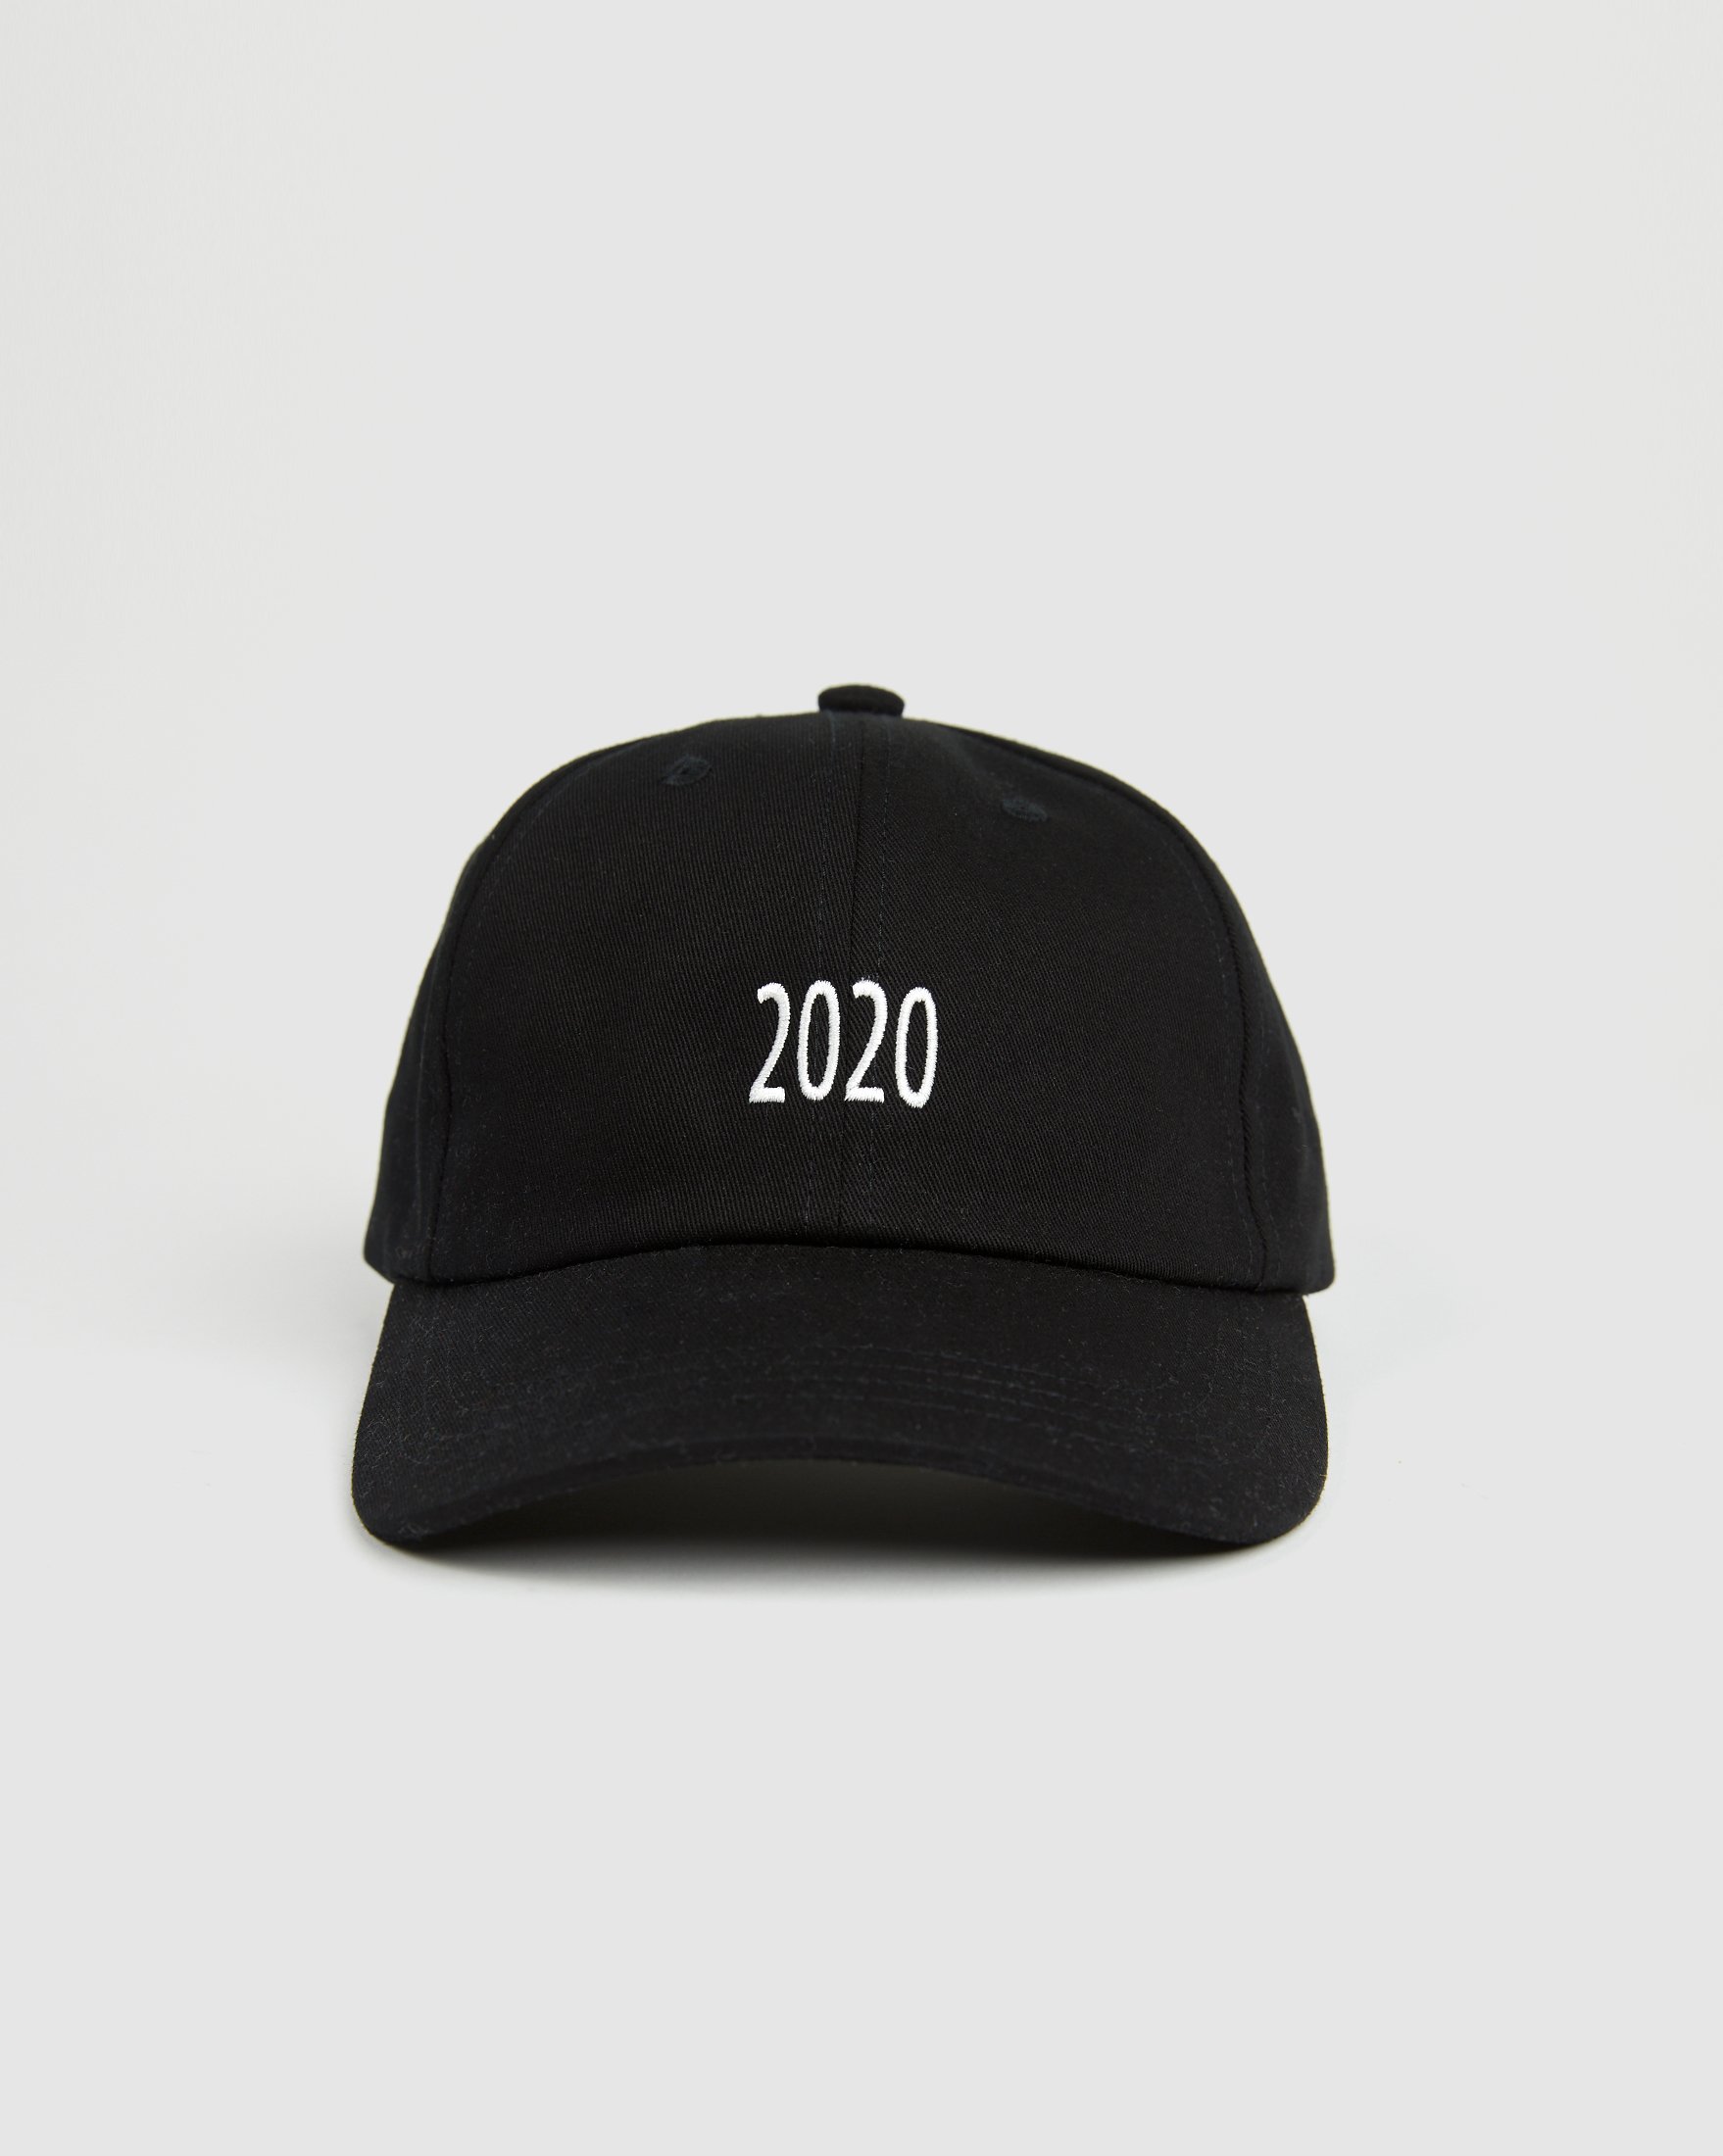 Highsnobiety - This Never Happened 2020 Cap Black - Caps - Black - Image 2